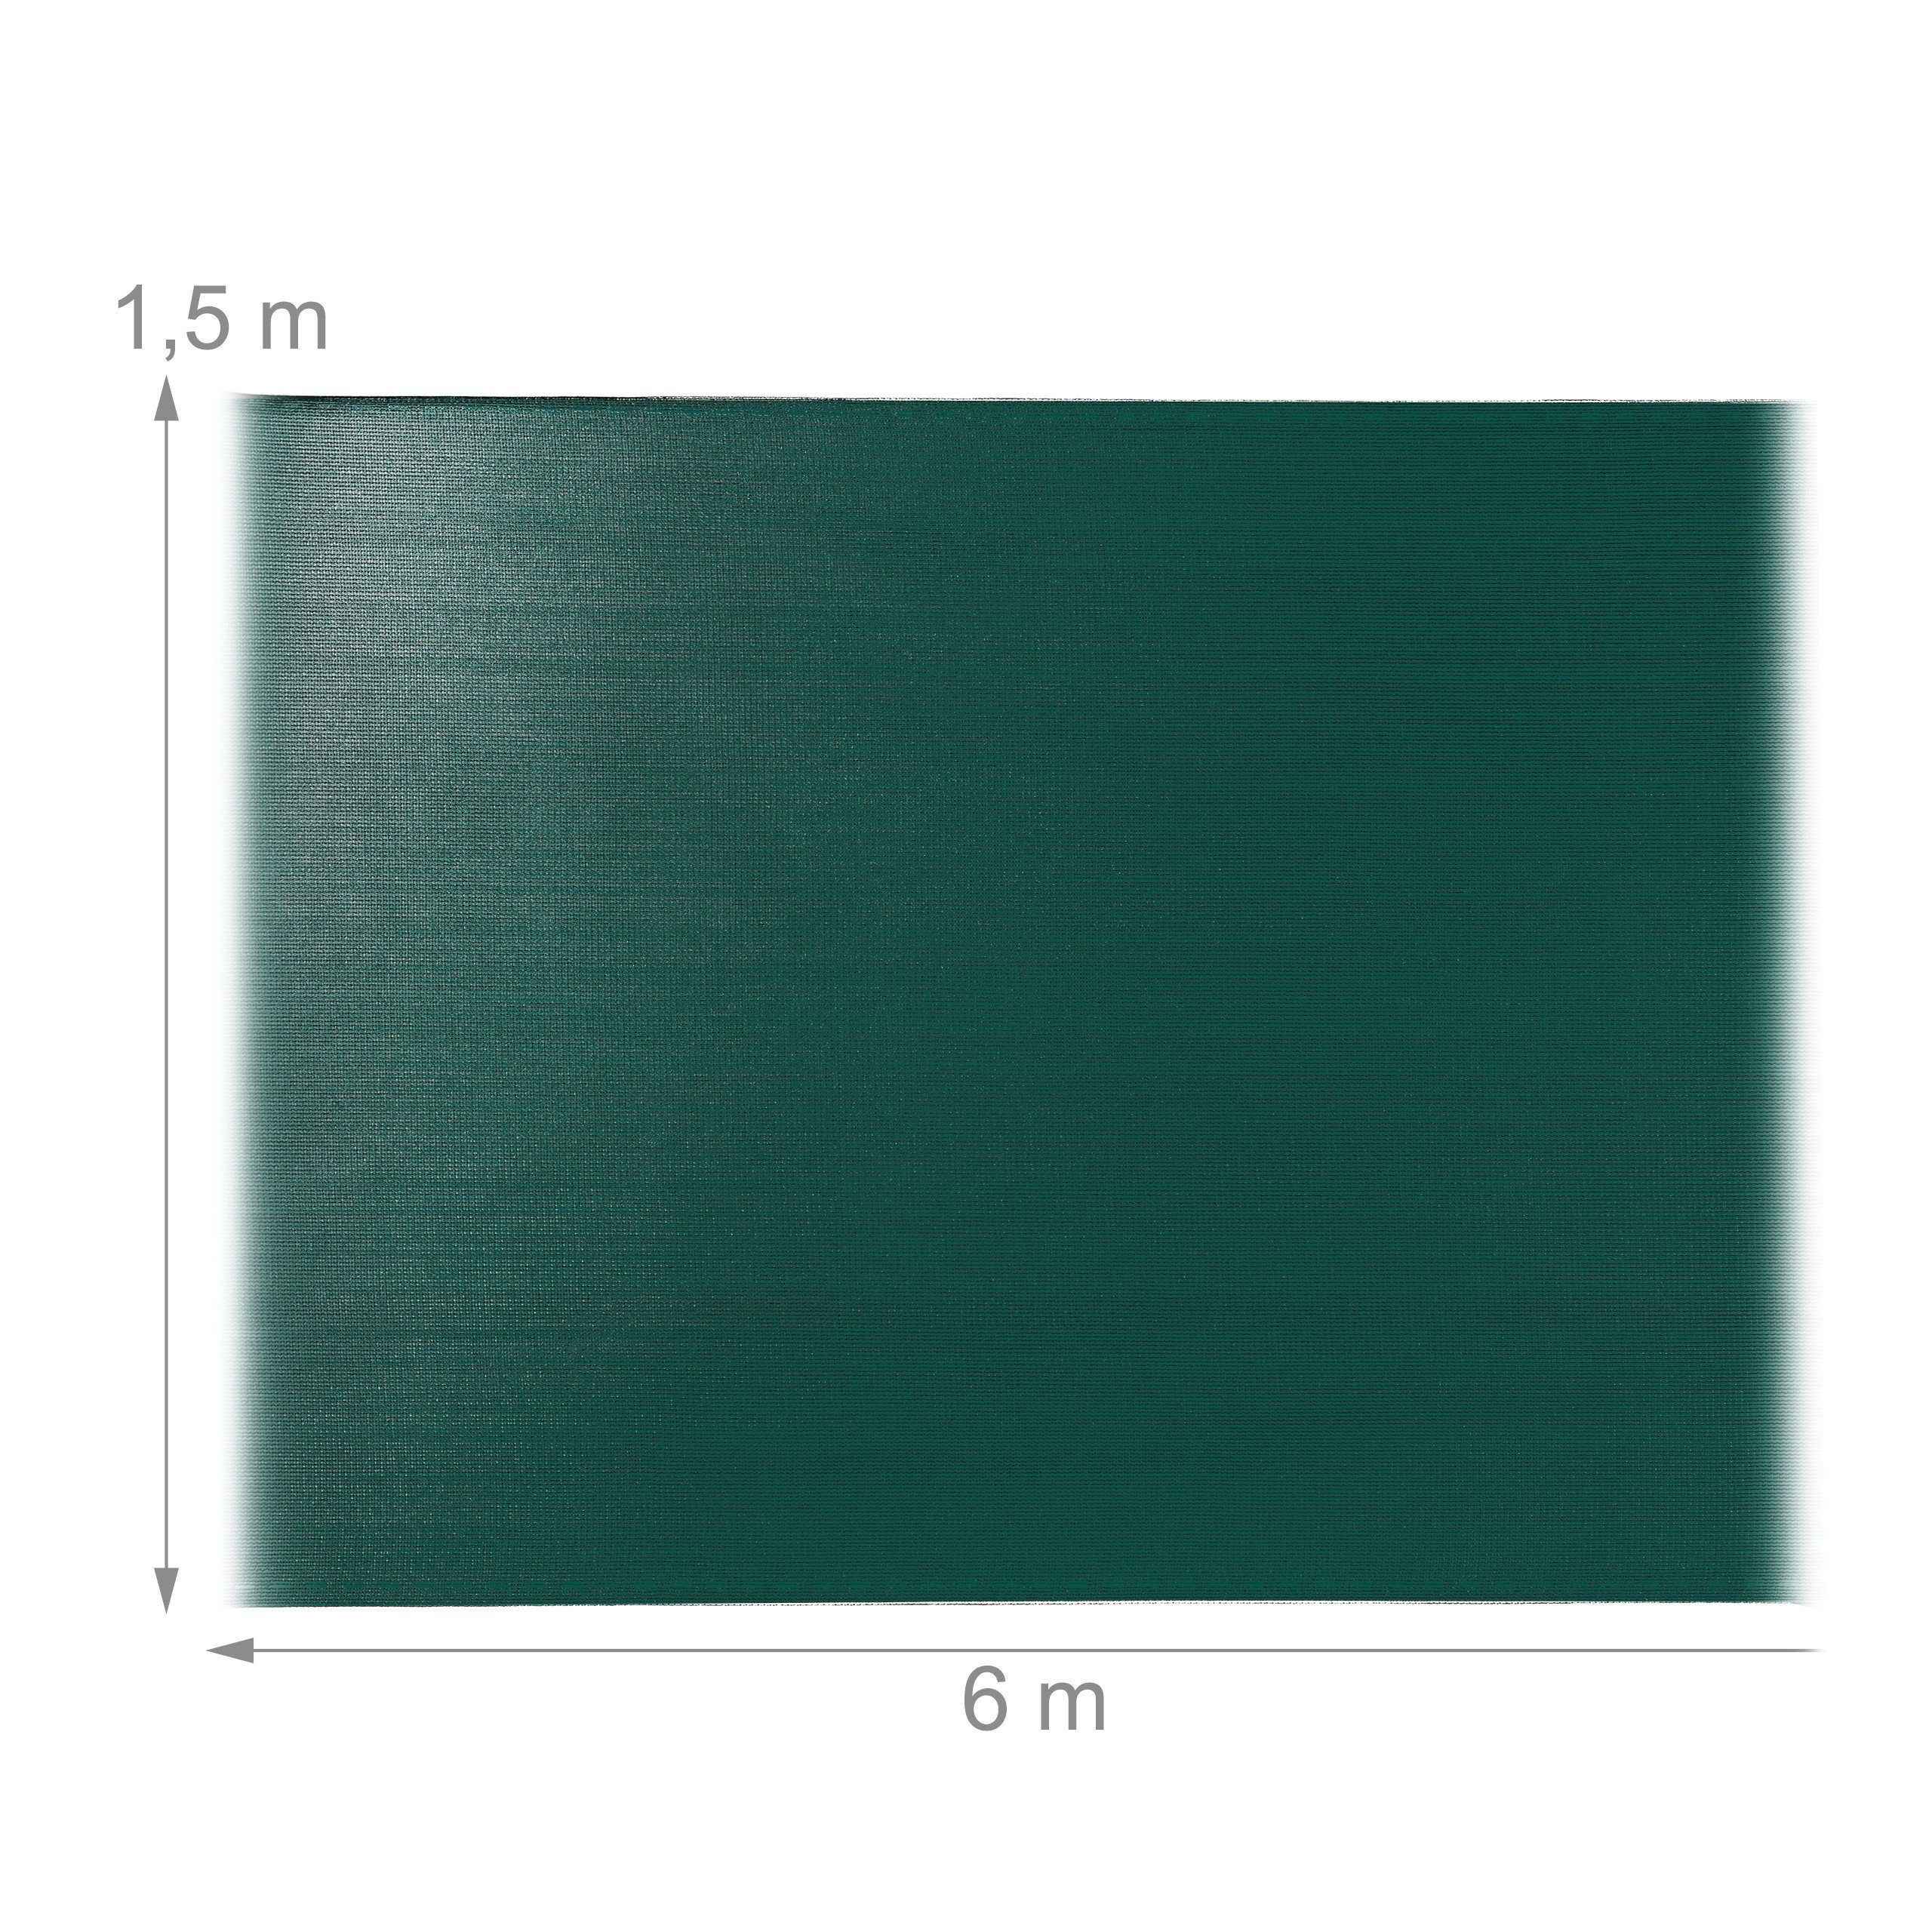 x 1,5 1,5m, Zaunblende relaxdays Blende 6 grün Meter